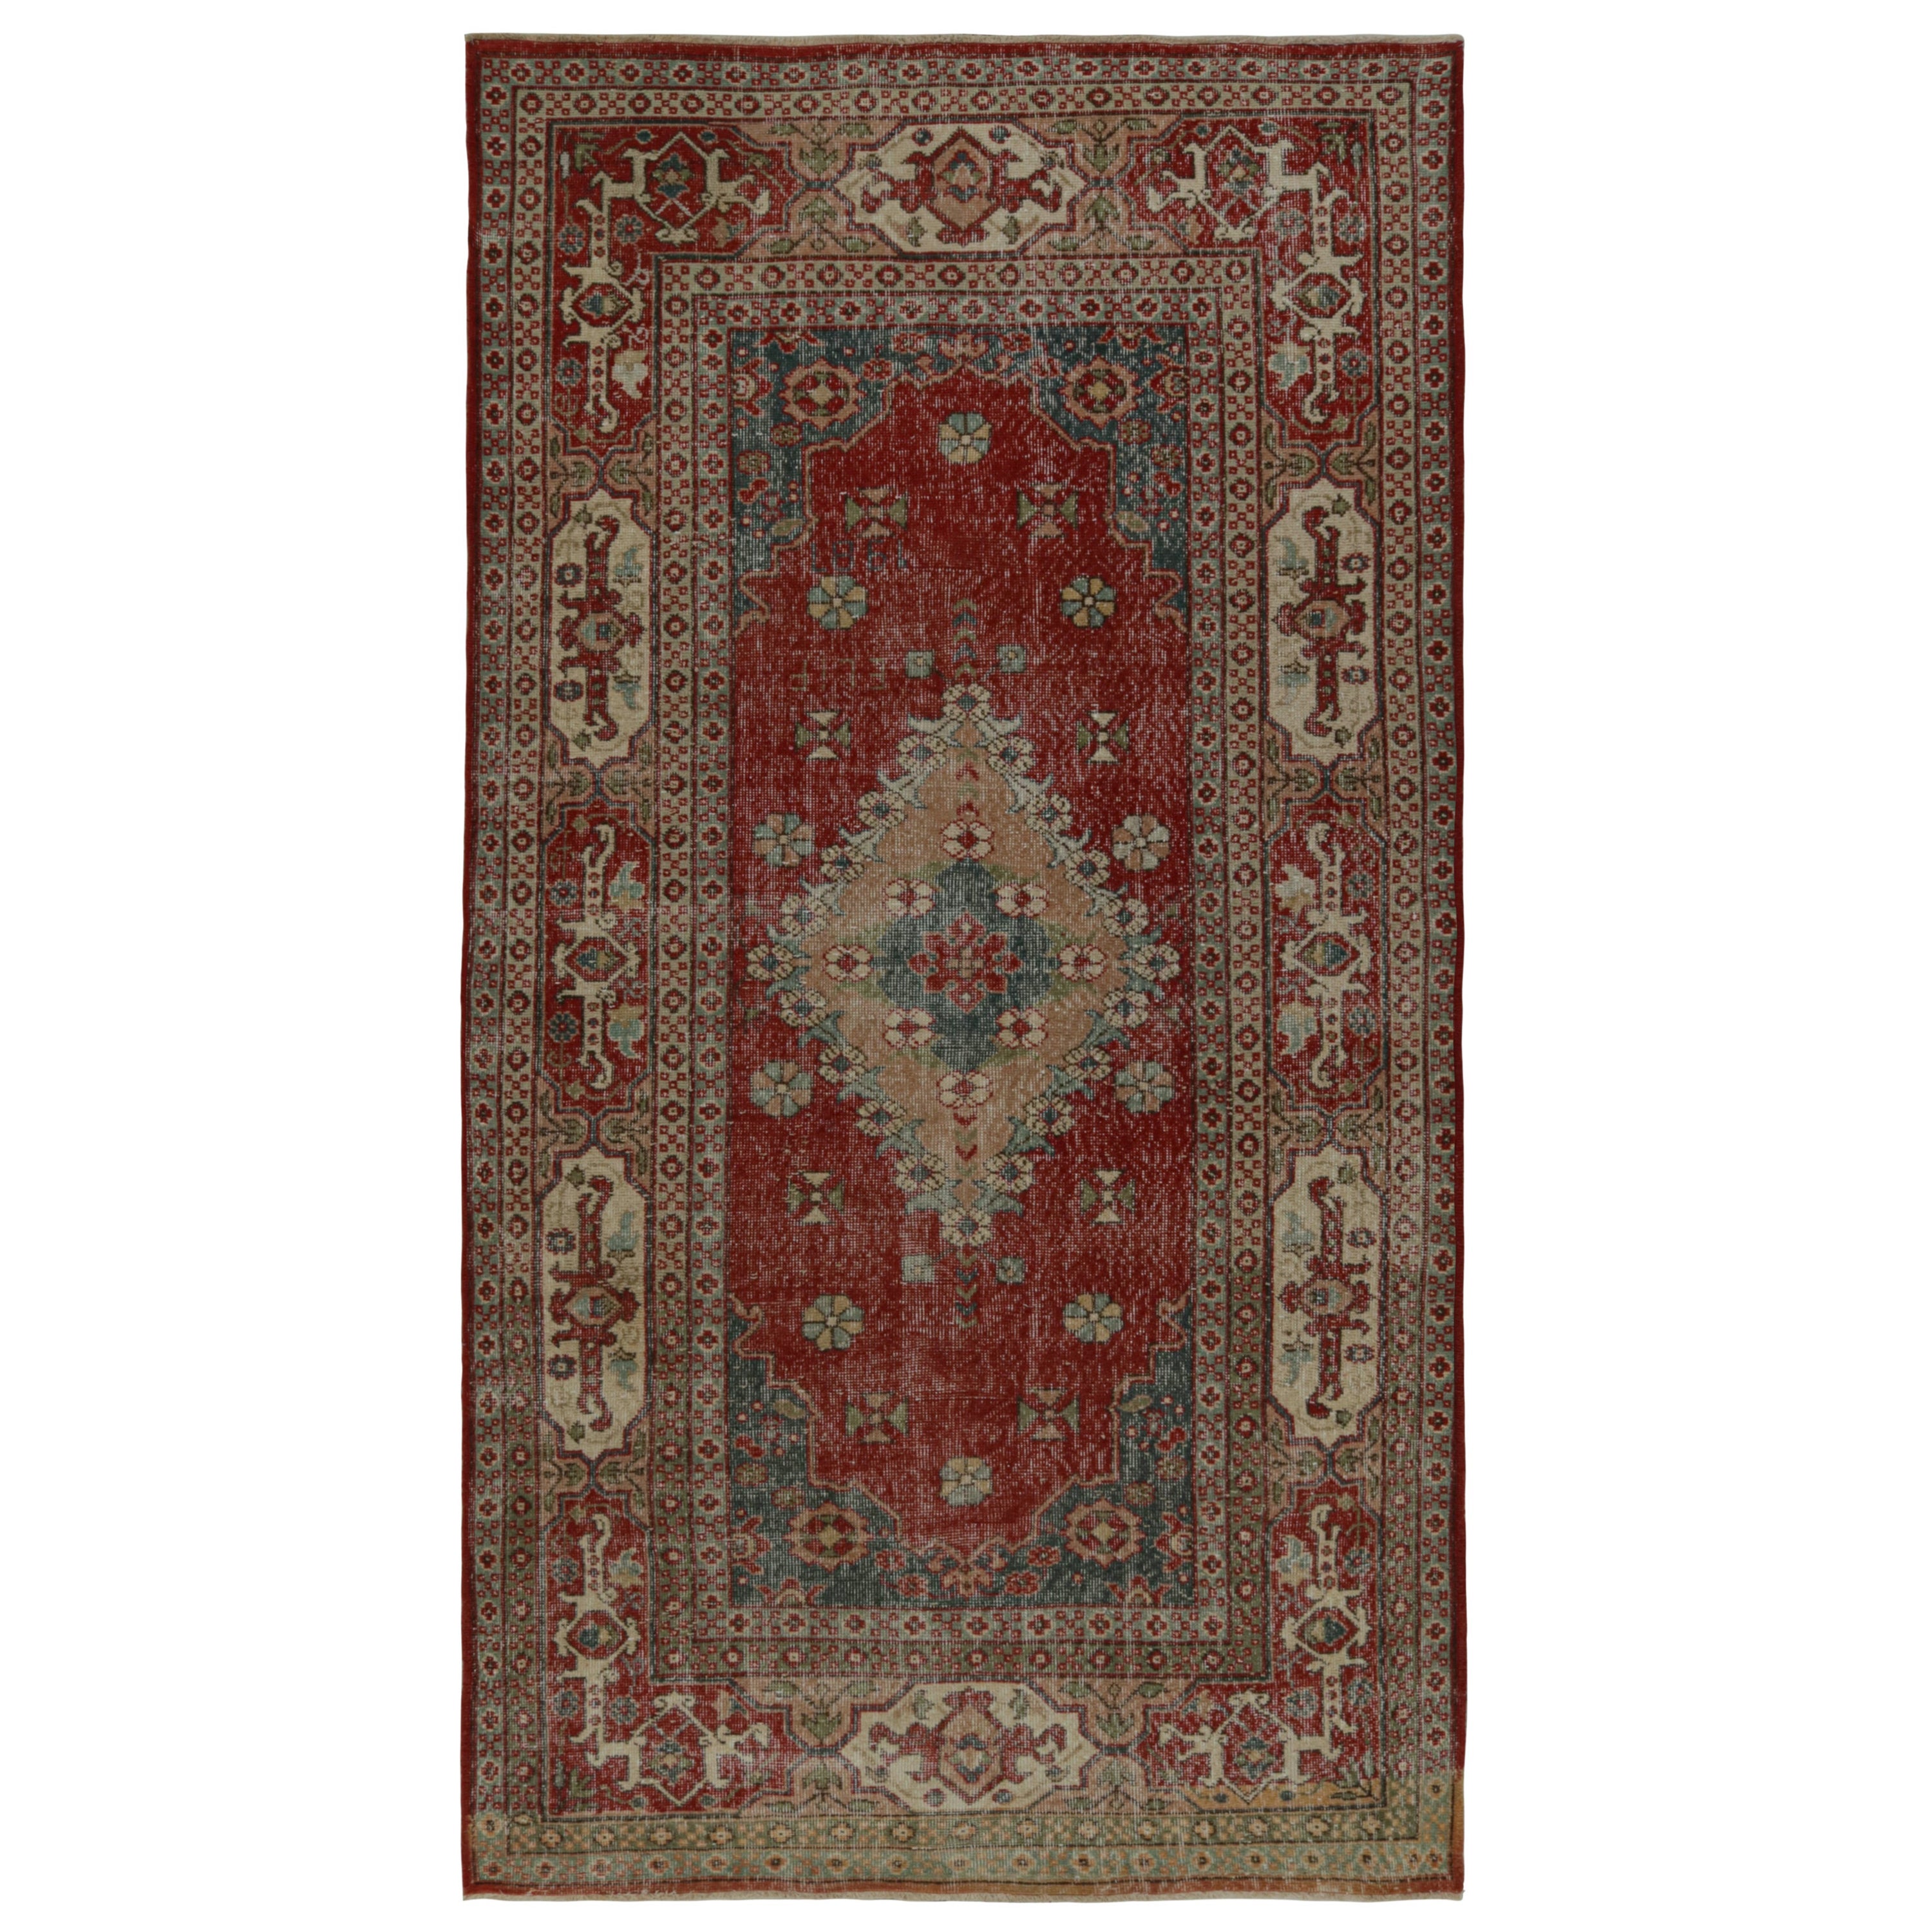 Vintage Zeki Muren Persian-inspired rug in Beige-Brown, from Rug & Kilim For Sale